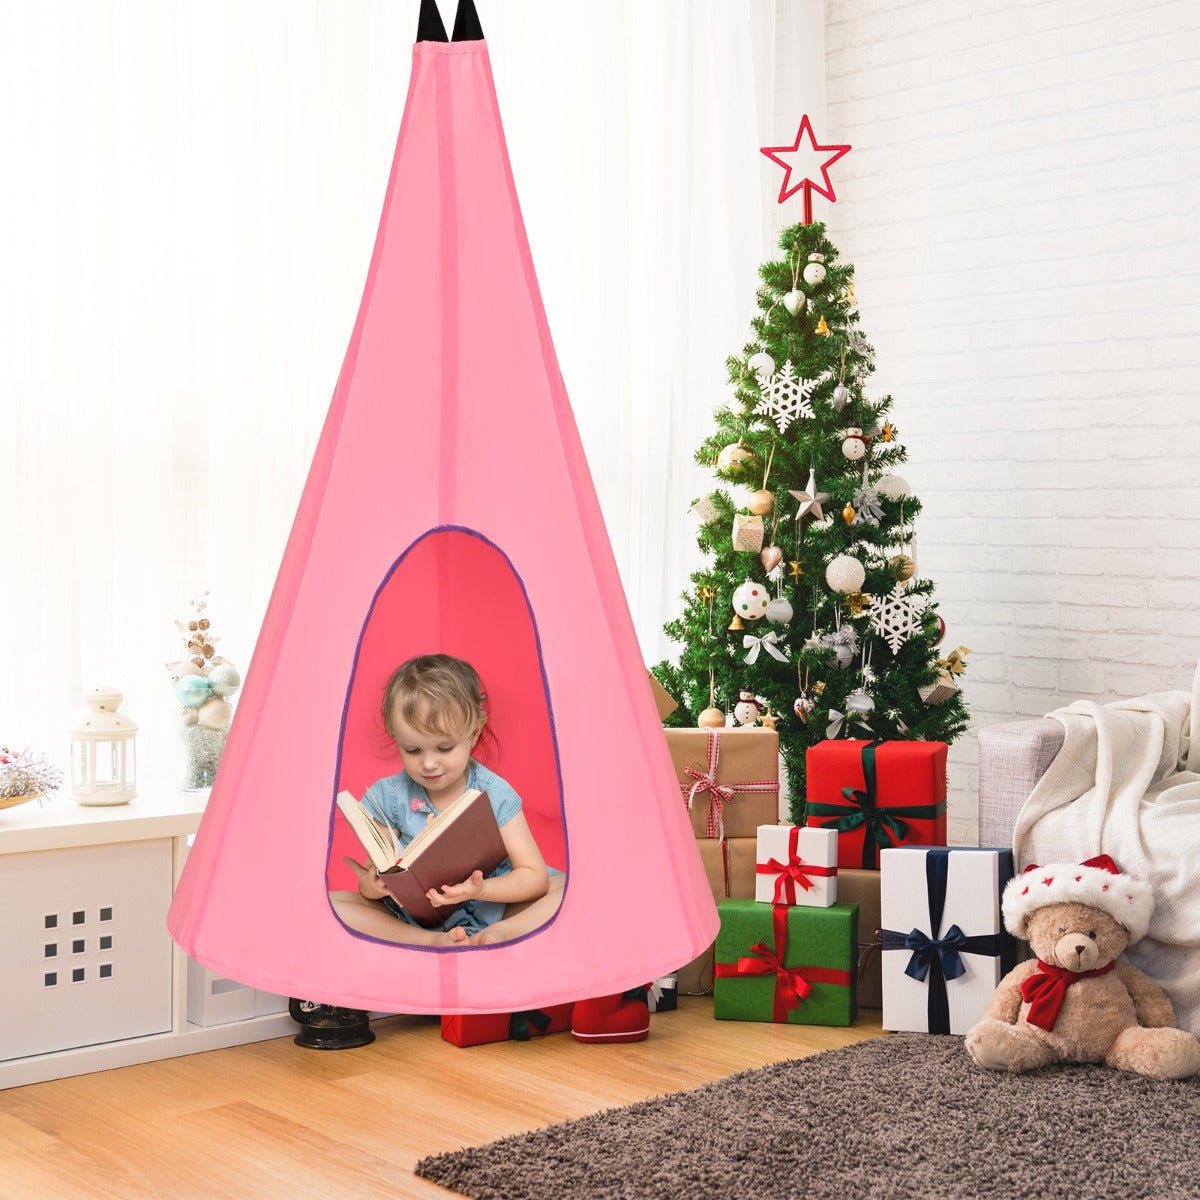 Cozy Comfort: Kids Nest Swing Tent Pink 80cm for Relaxing Swings